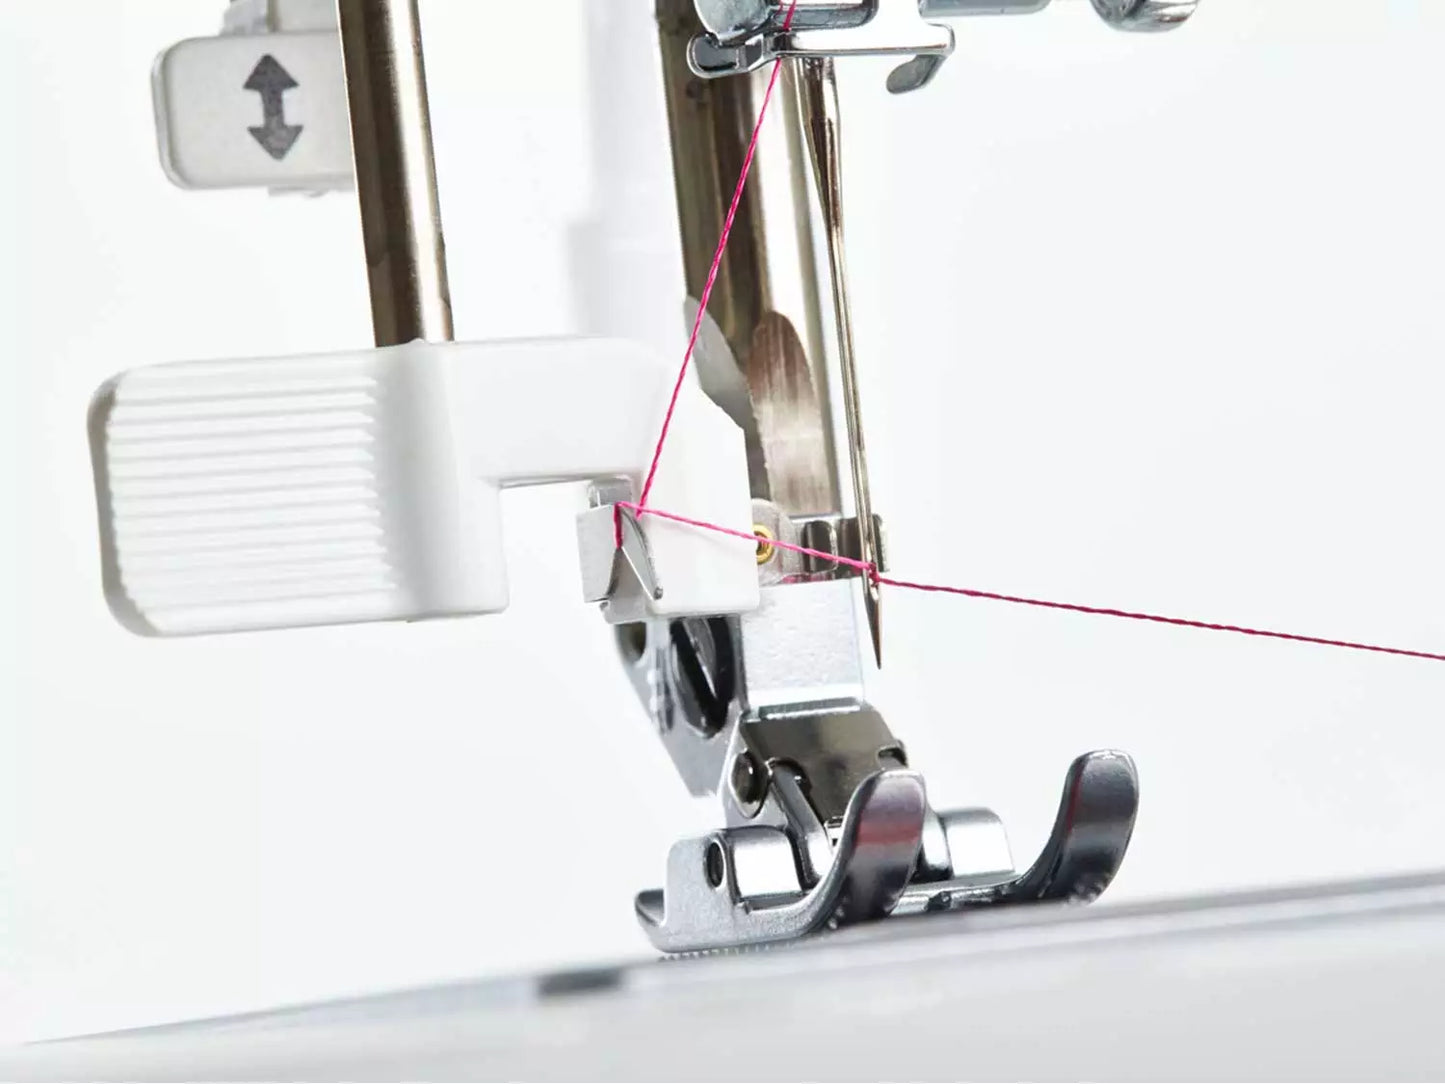 SMARTER by PFAFF 160s Sewing Machine